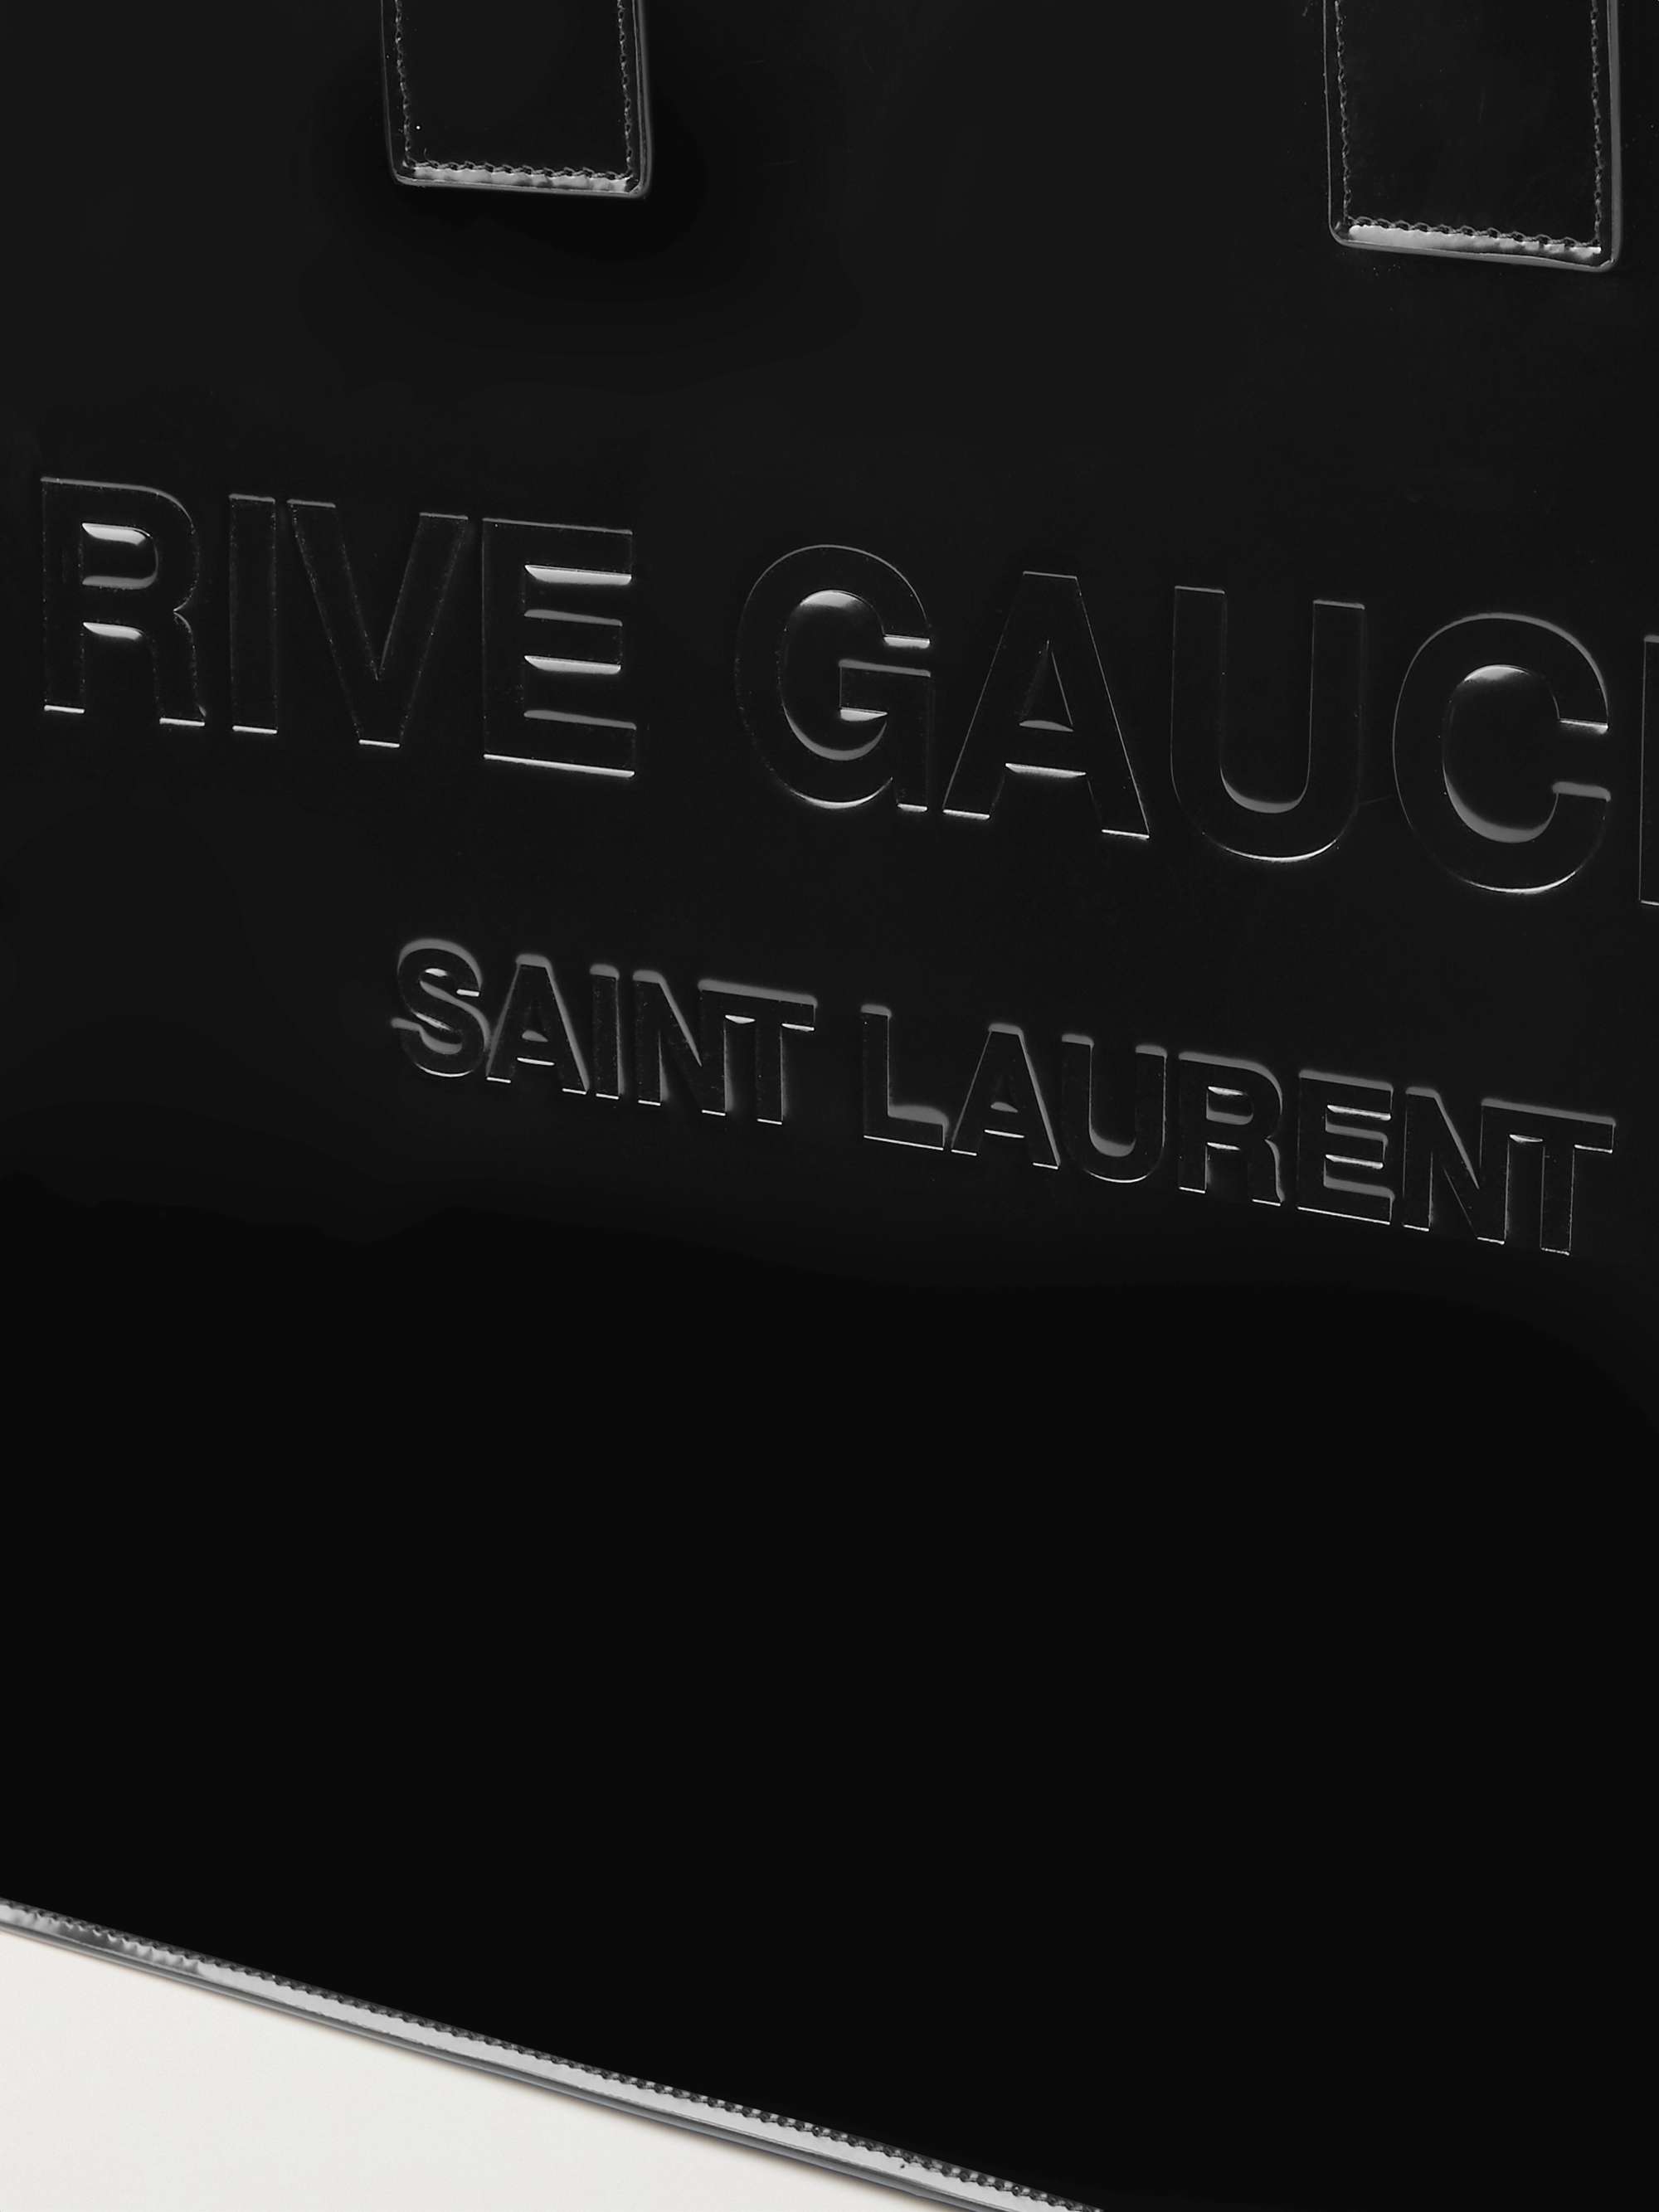 Saint Laurent Rive Gauche Patent-leather Tote Bag in Black for Men